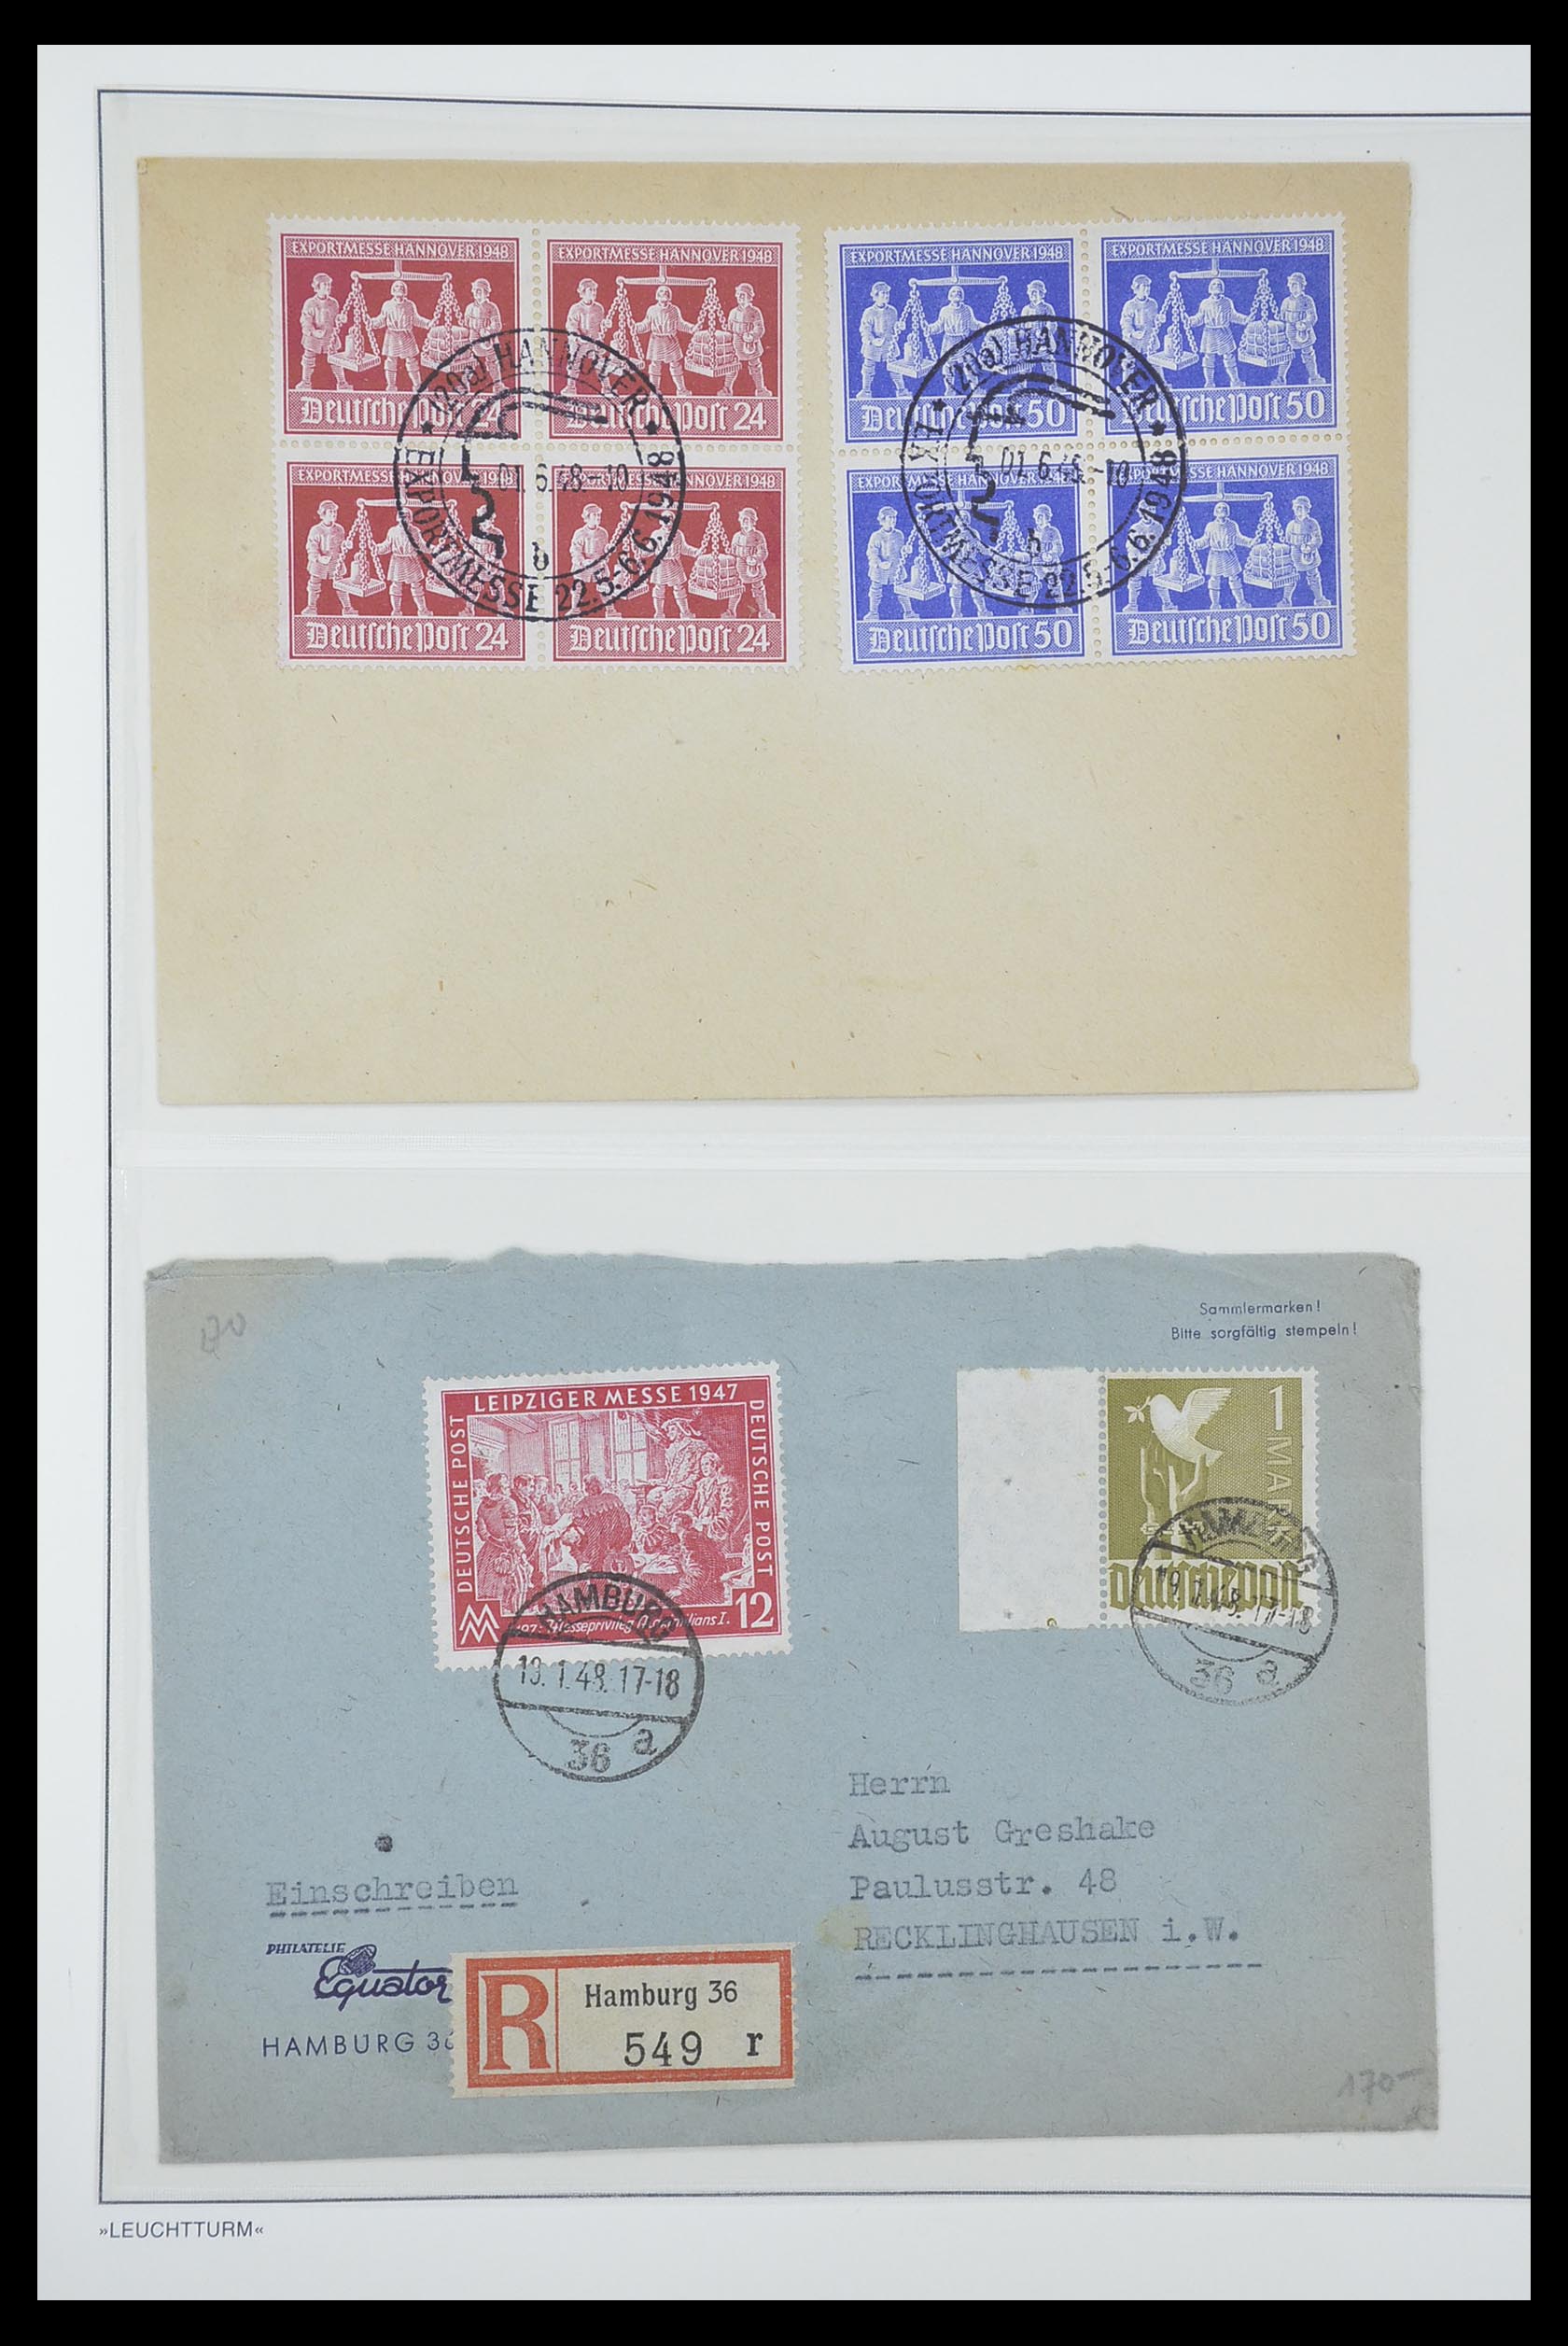 33837 038 - Stamp collection 33837 German Zones 1945-1948.